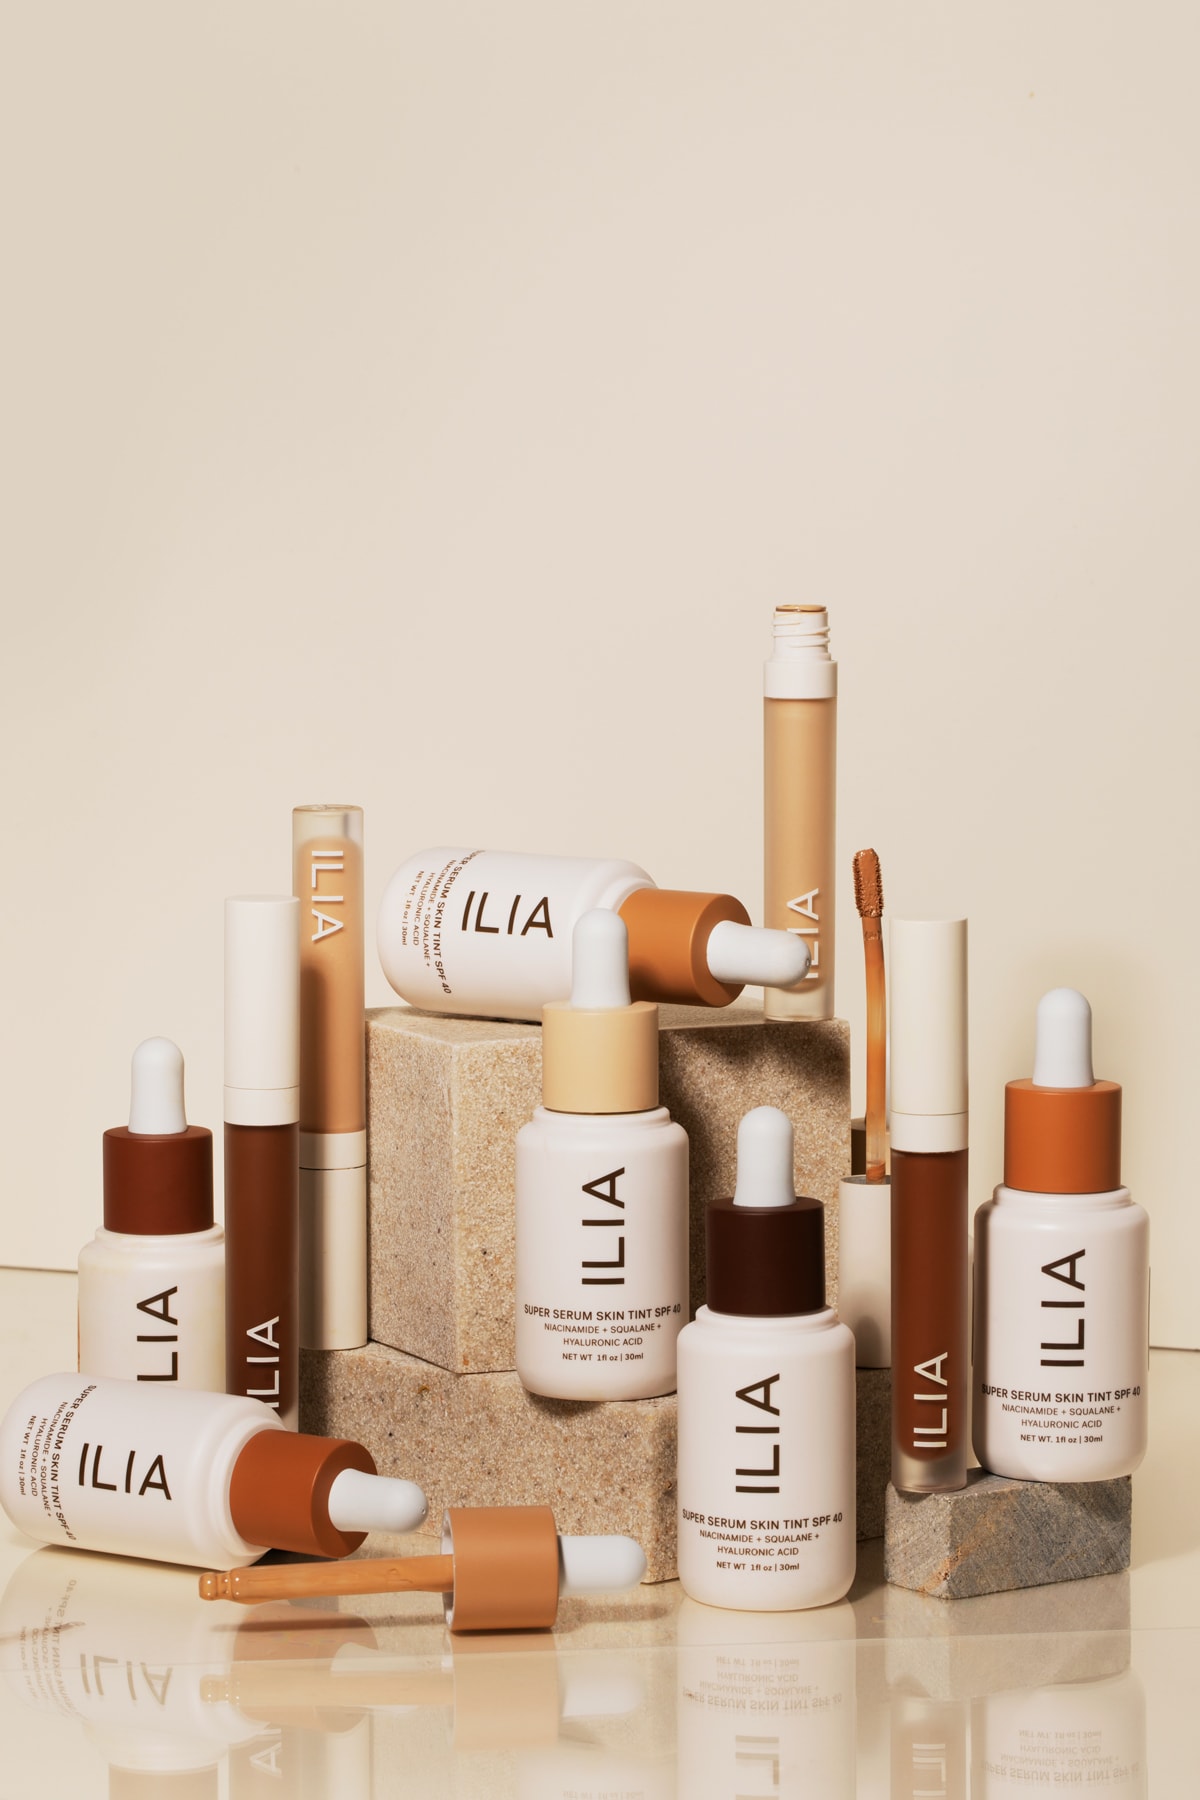 ILIA Beauty Super Serum Skin Tint SPF 40 Shades Colors of Us Campaign